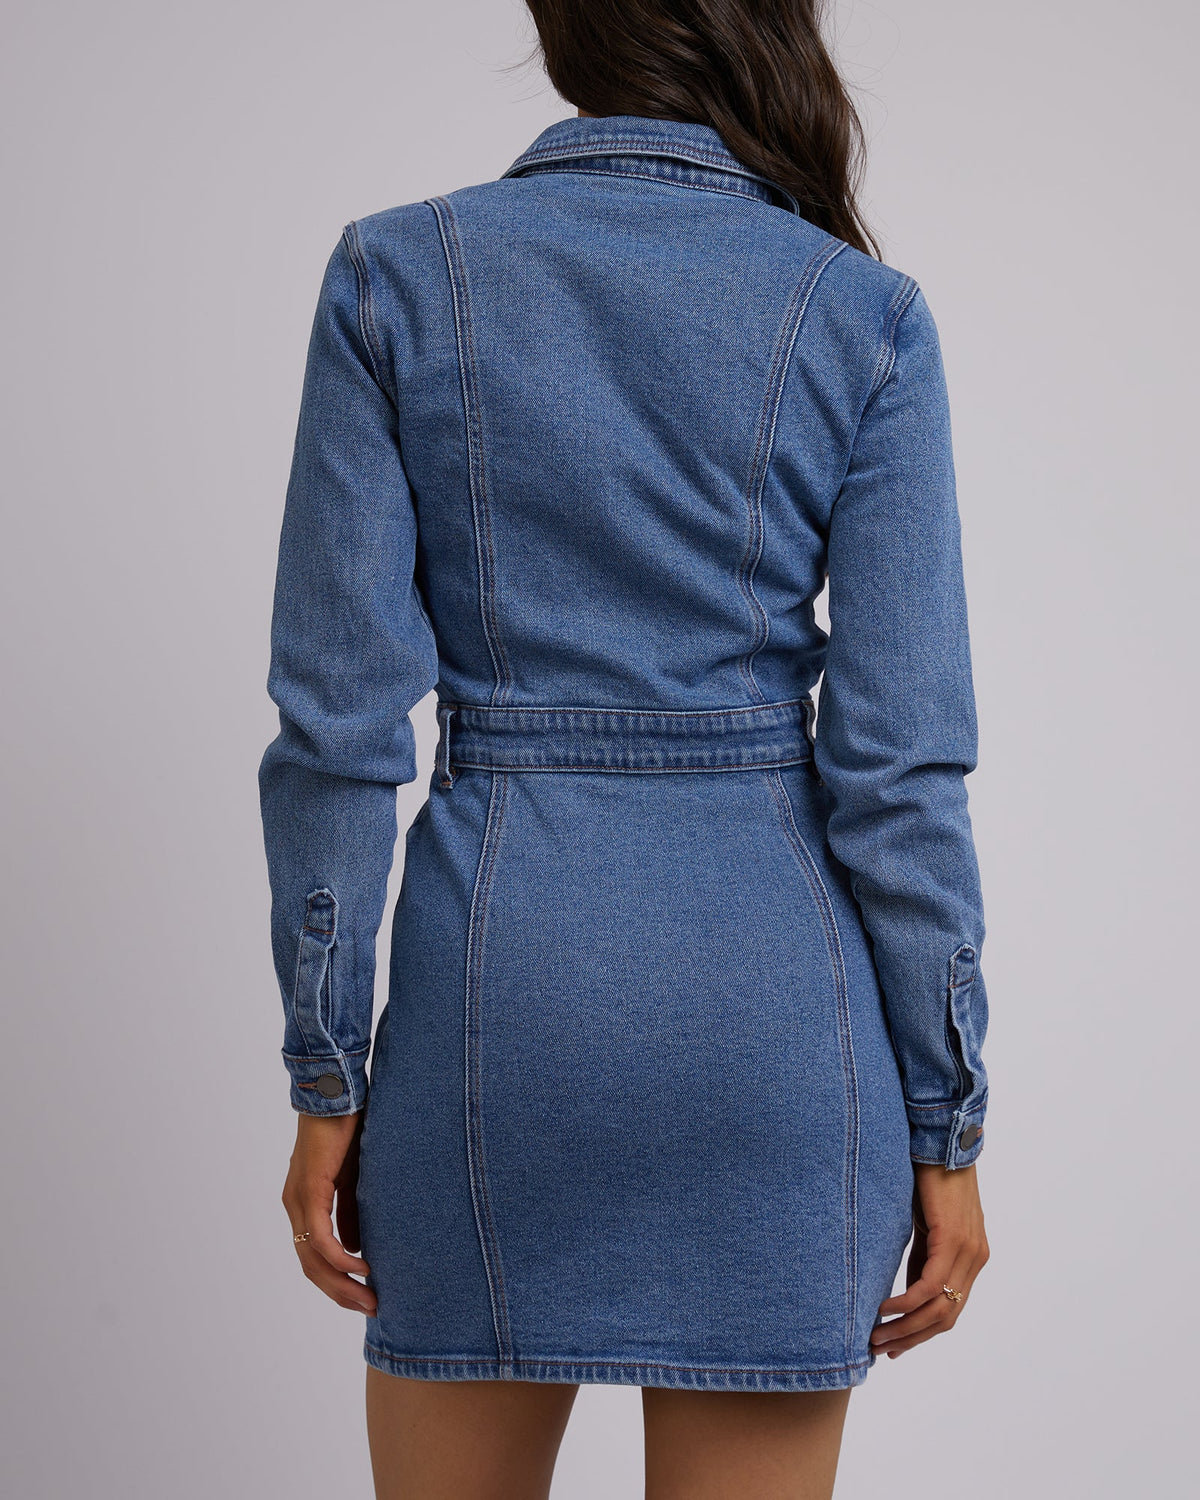 All About Eve-Kayla Denim Mini Dress Heritage Blue-Edge Clothing